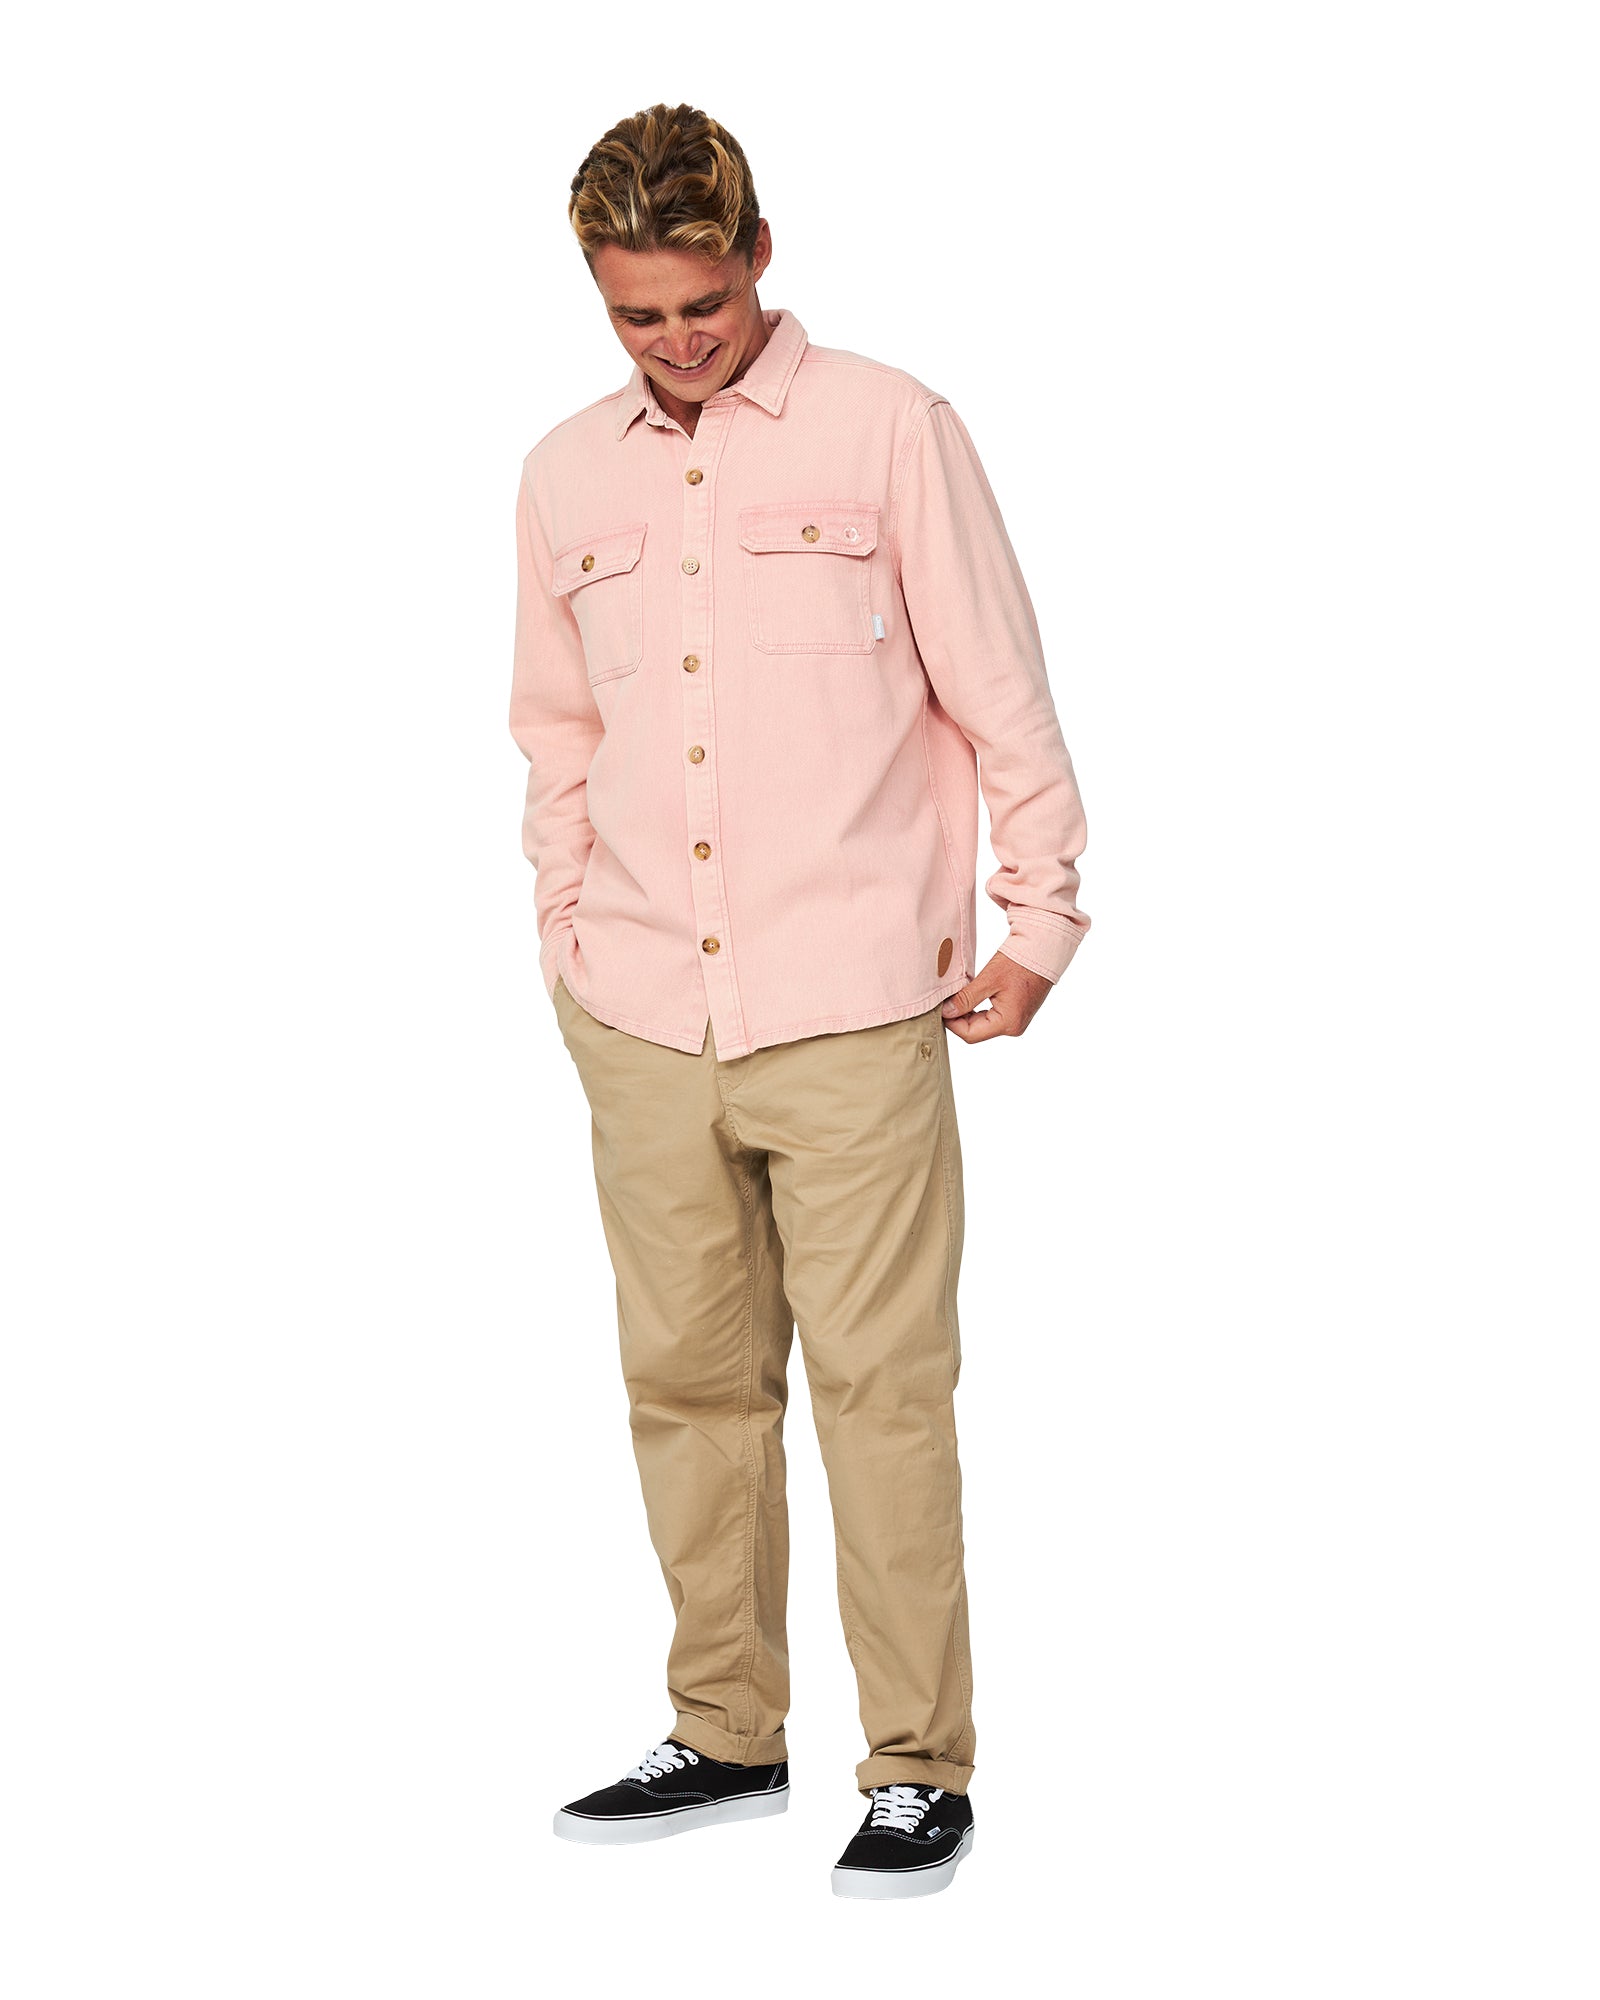 Mens - Long Sleeve Shirt - Deck - Dusty Pink